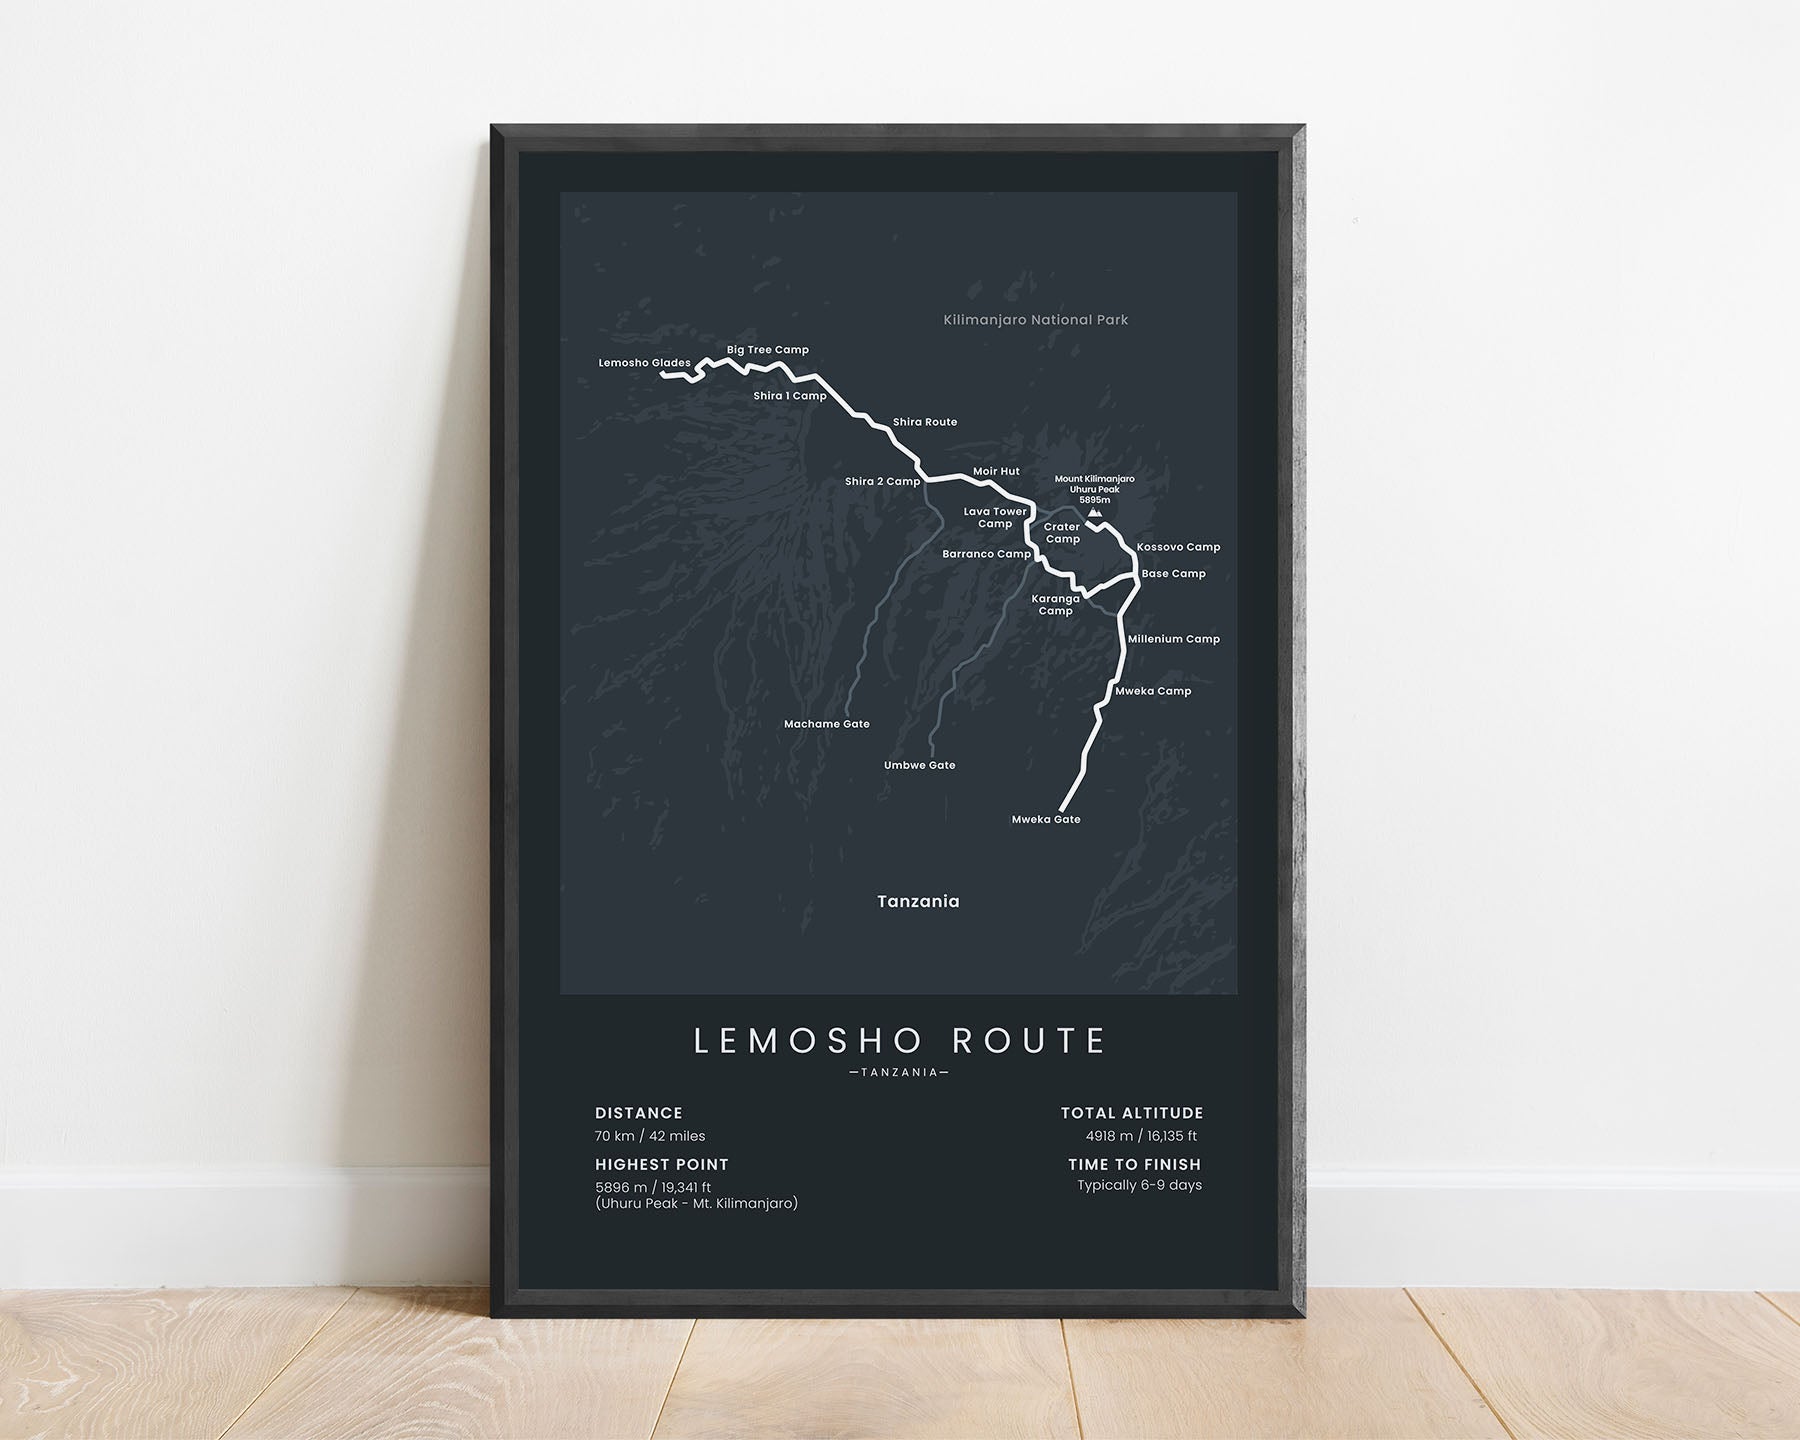 Lemosho Route (Tanzania) Hiking Trail Print with Black Background